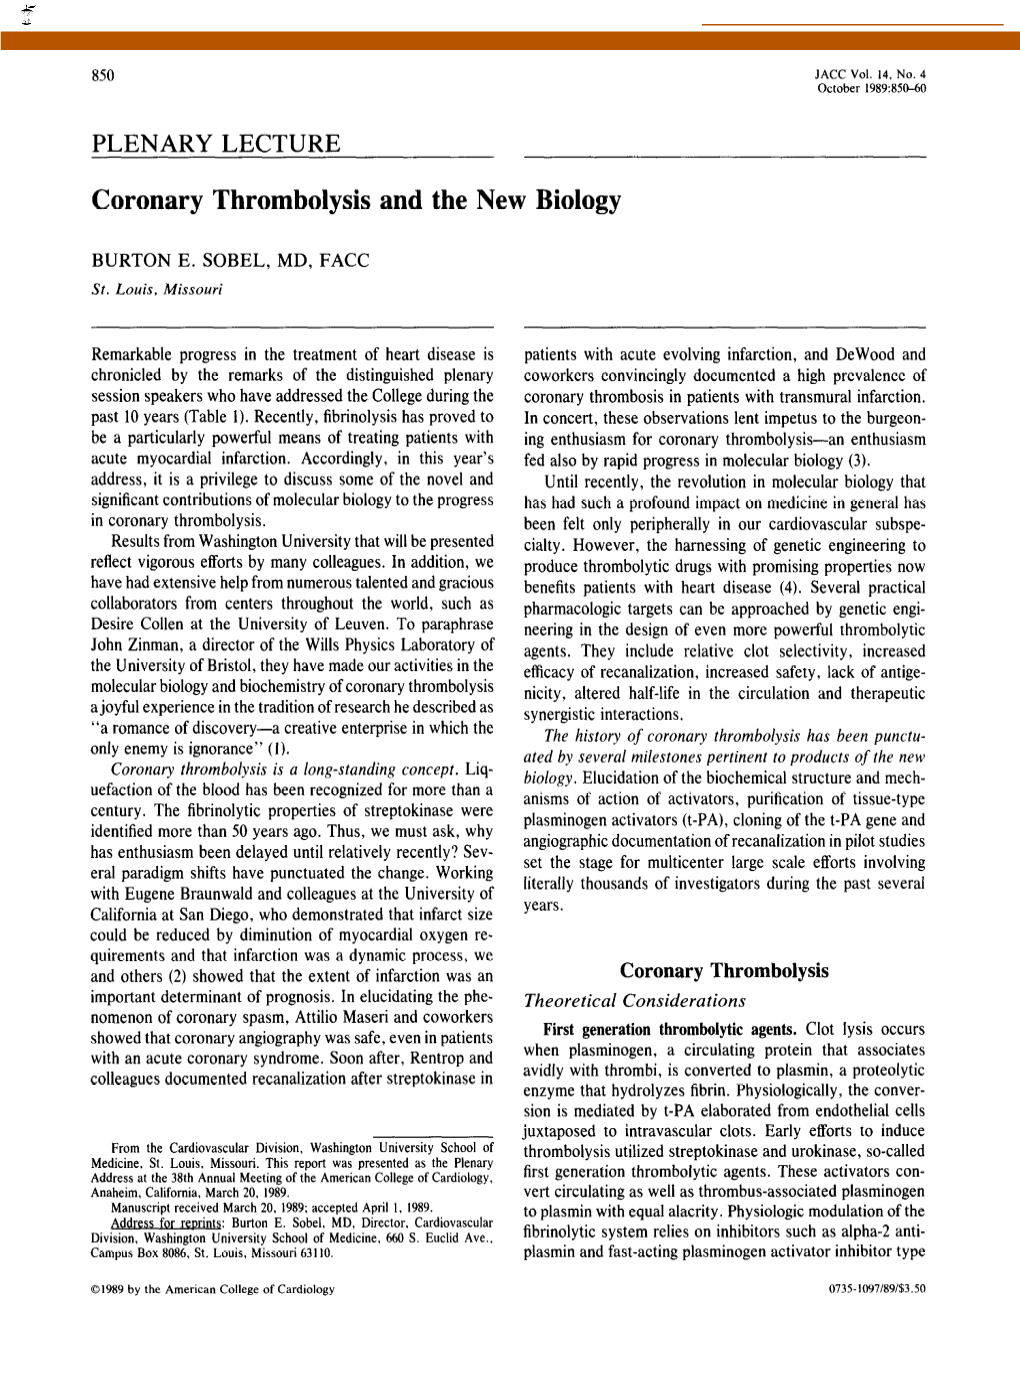 Coronary Thrombolysis and the New Biology